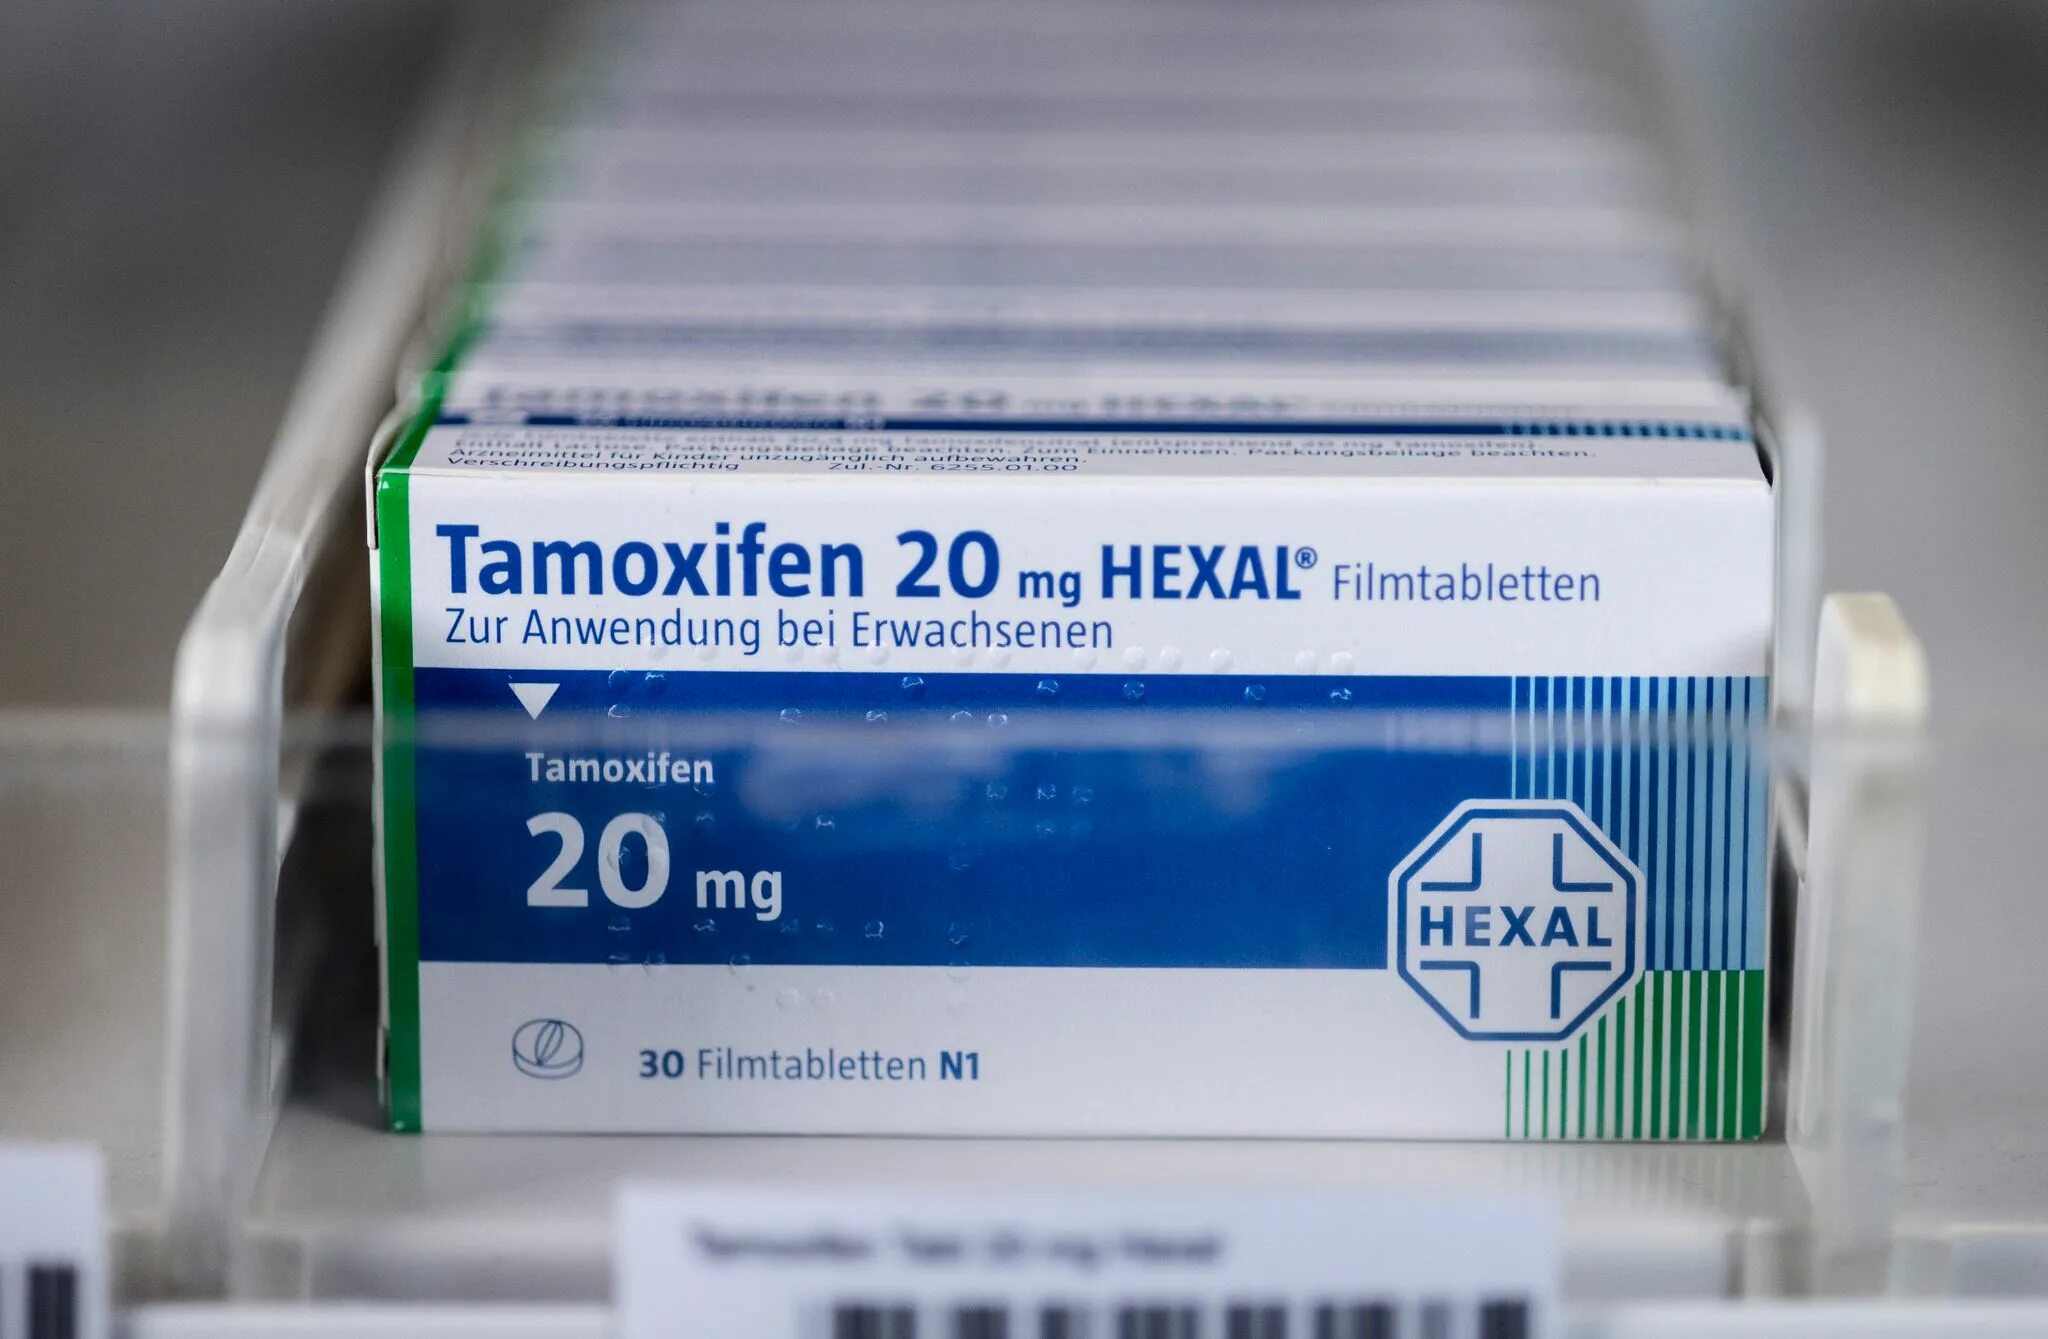 Tamoxifen Hexal Германия 20мг. Тамоксифен 20 мг Германия. Тамоксифен гексал фото. Тамоксифен гексал таблетки. Тамоксифен гексал таблетки цены